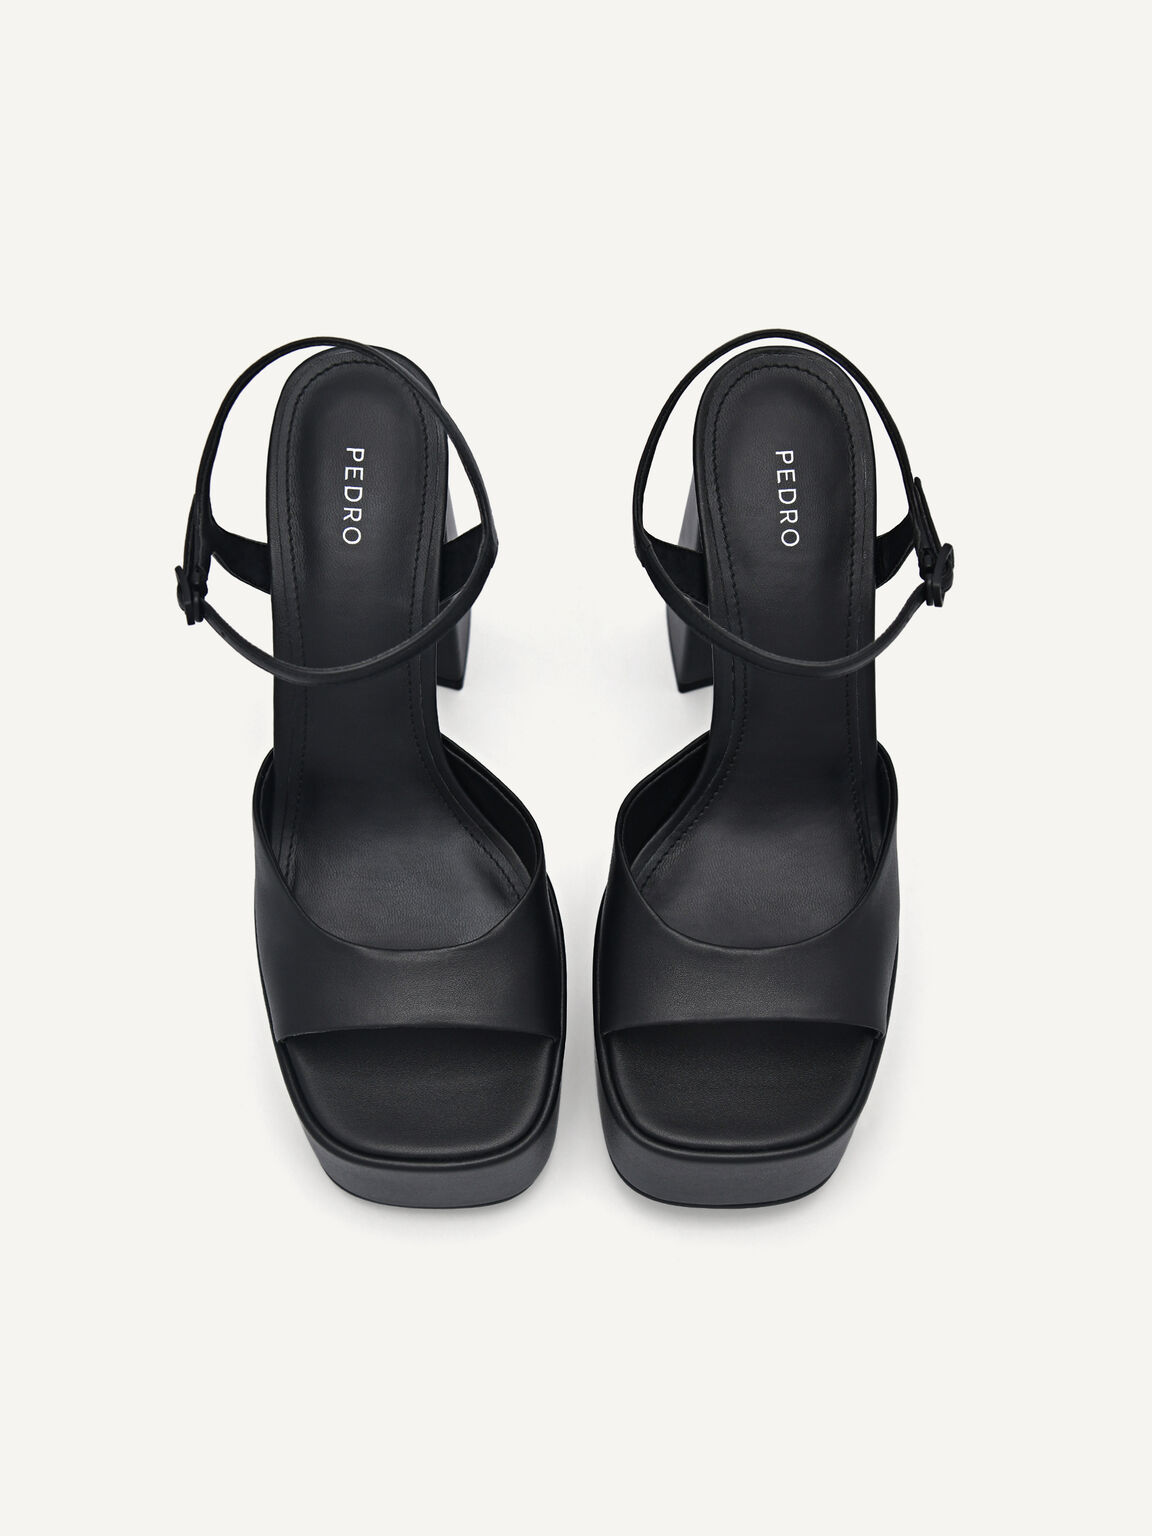 Selma Platform Heel Sandals, Black